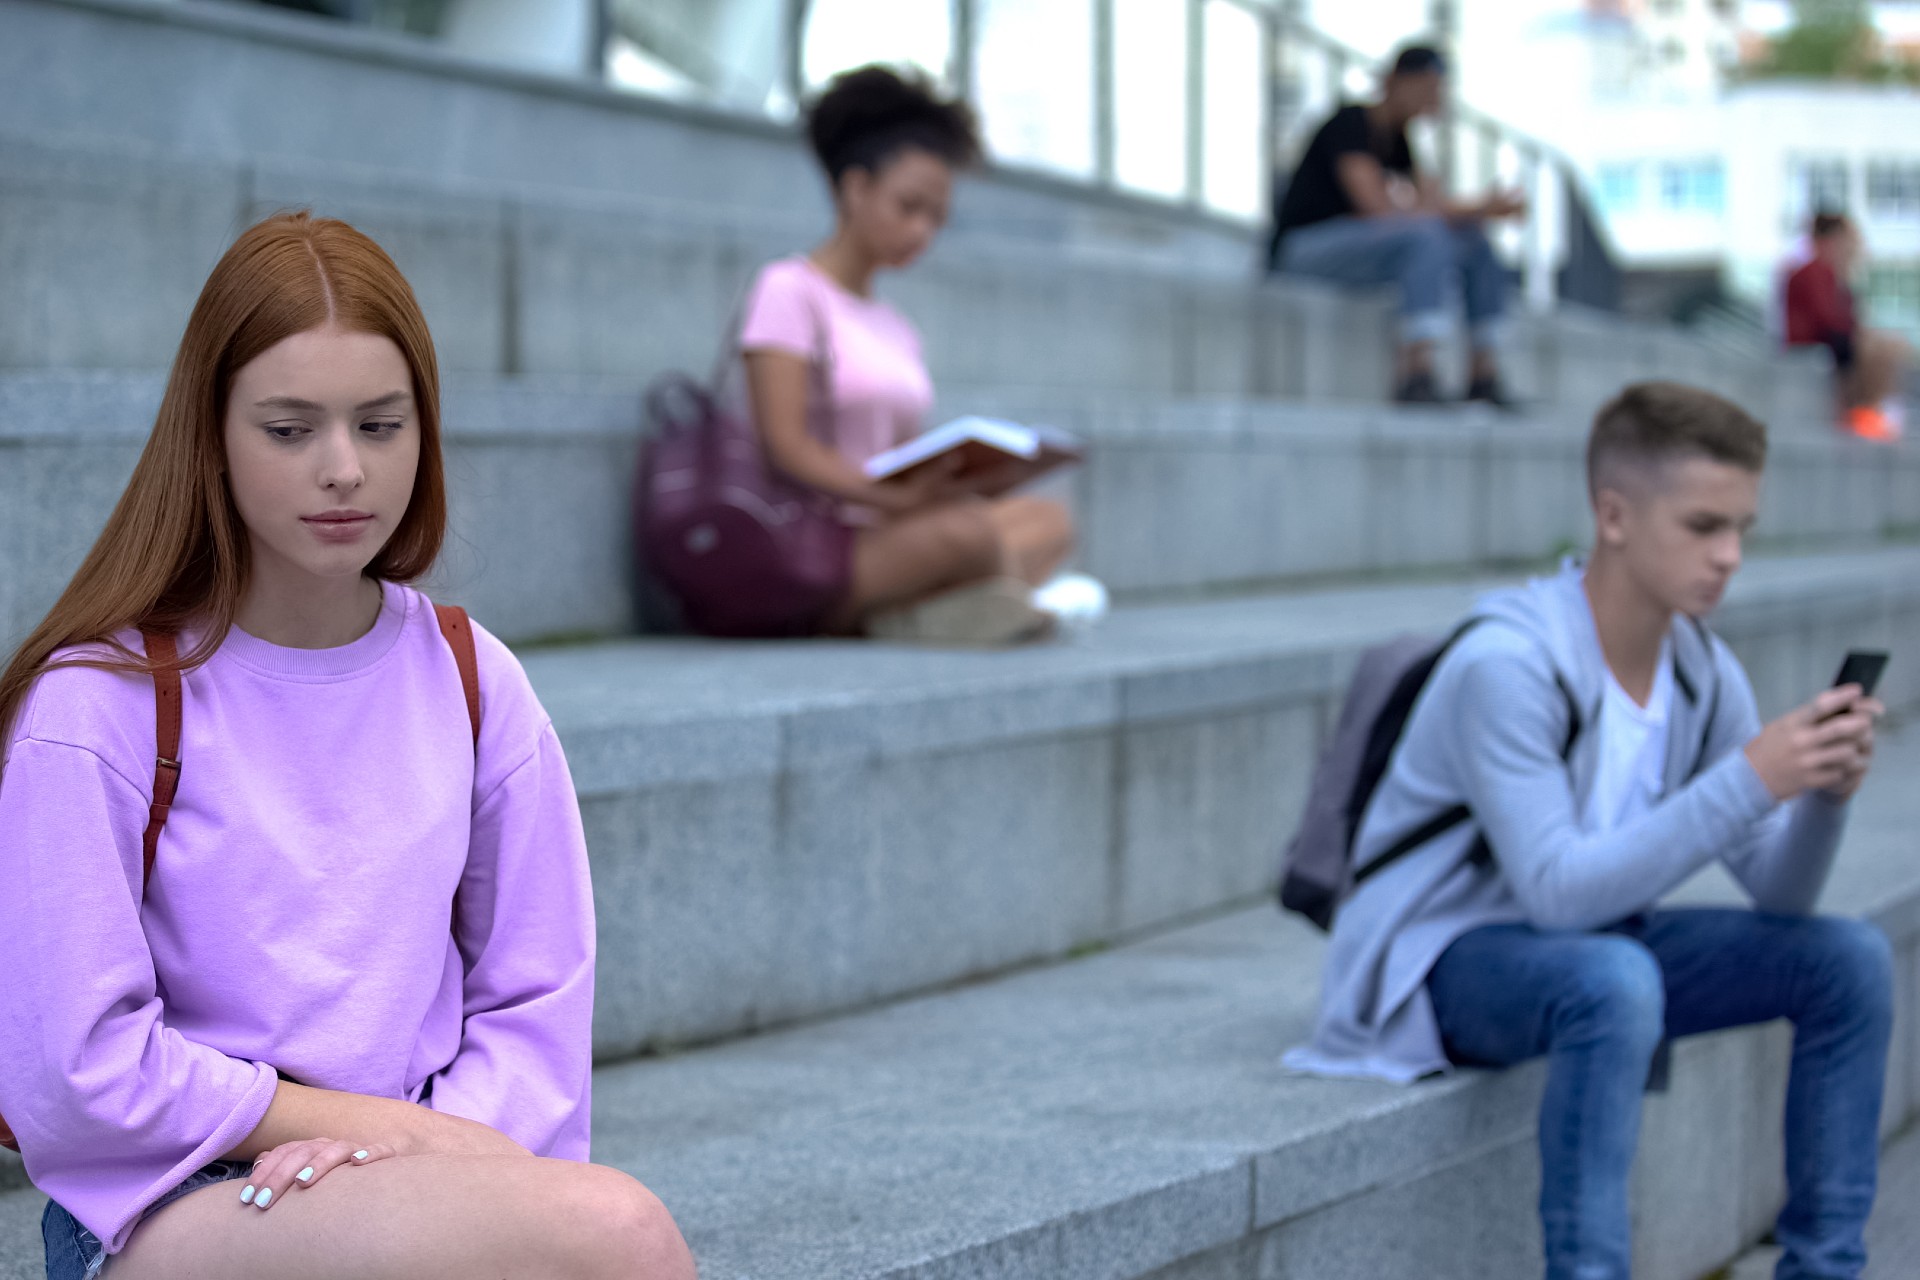 socially awkward teenager help teens ignoring each other